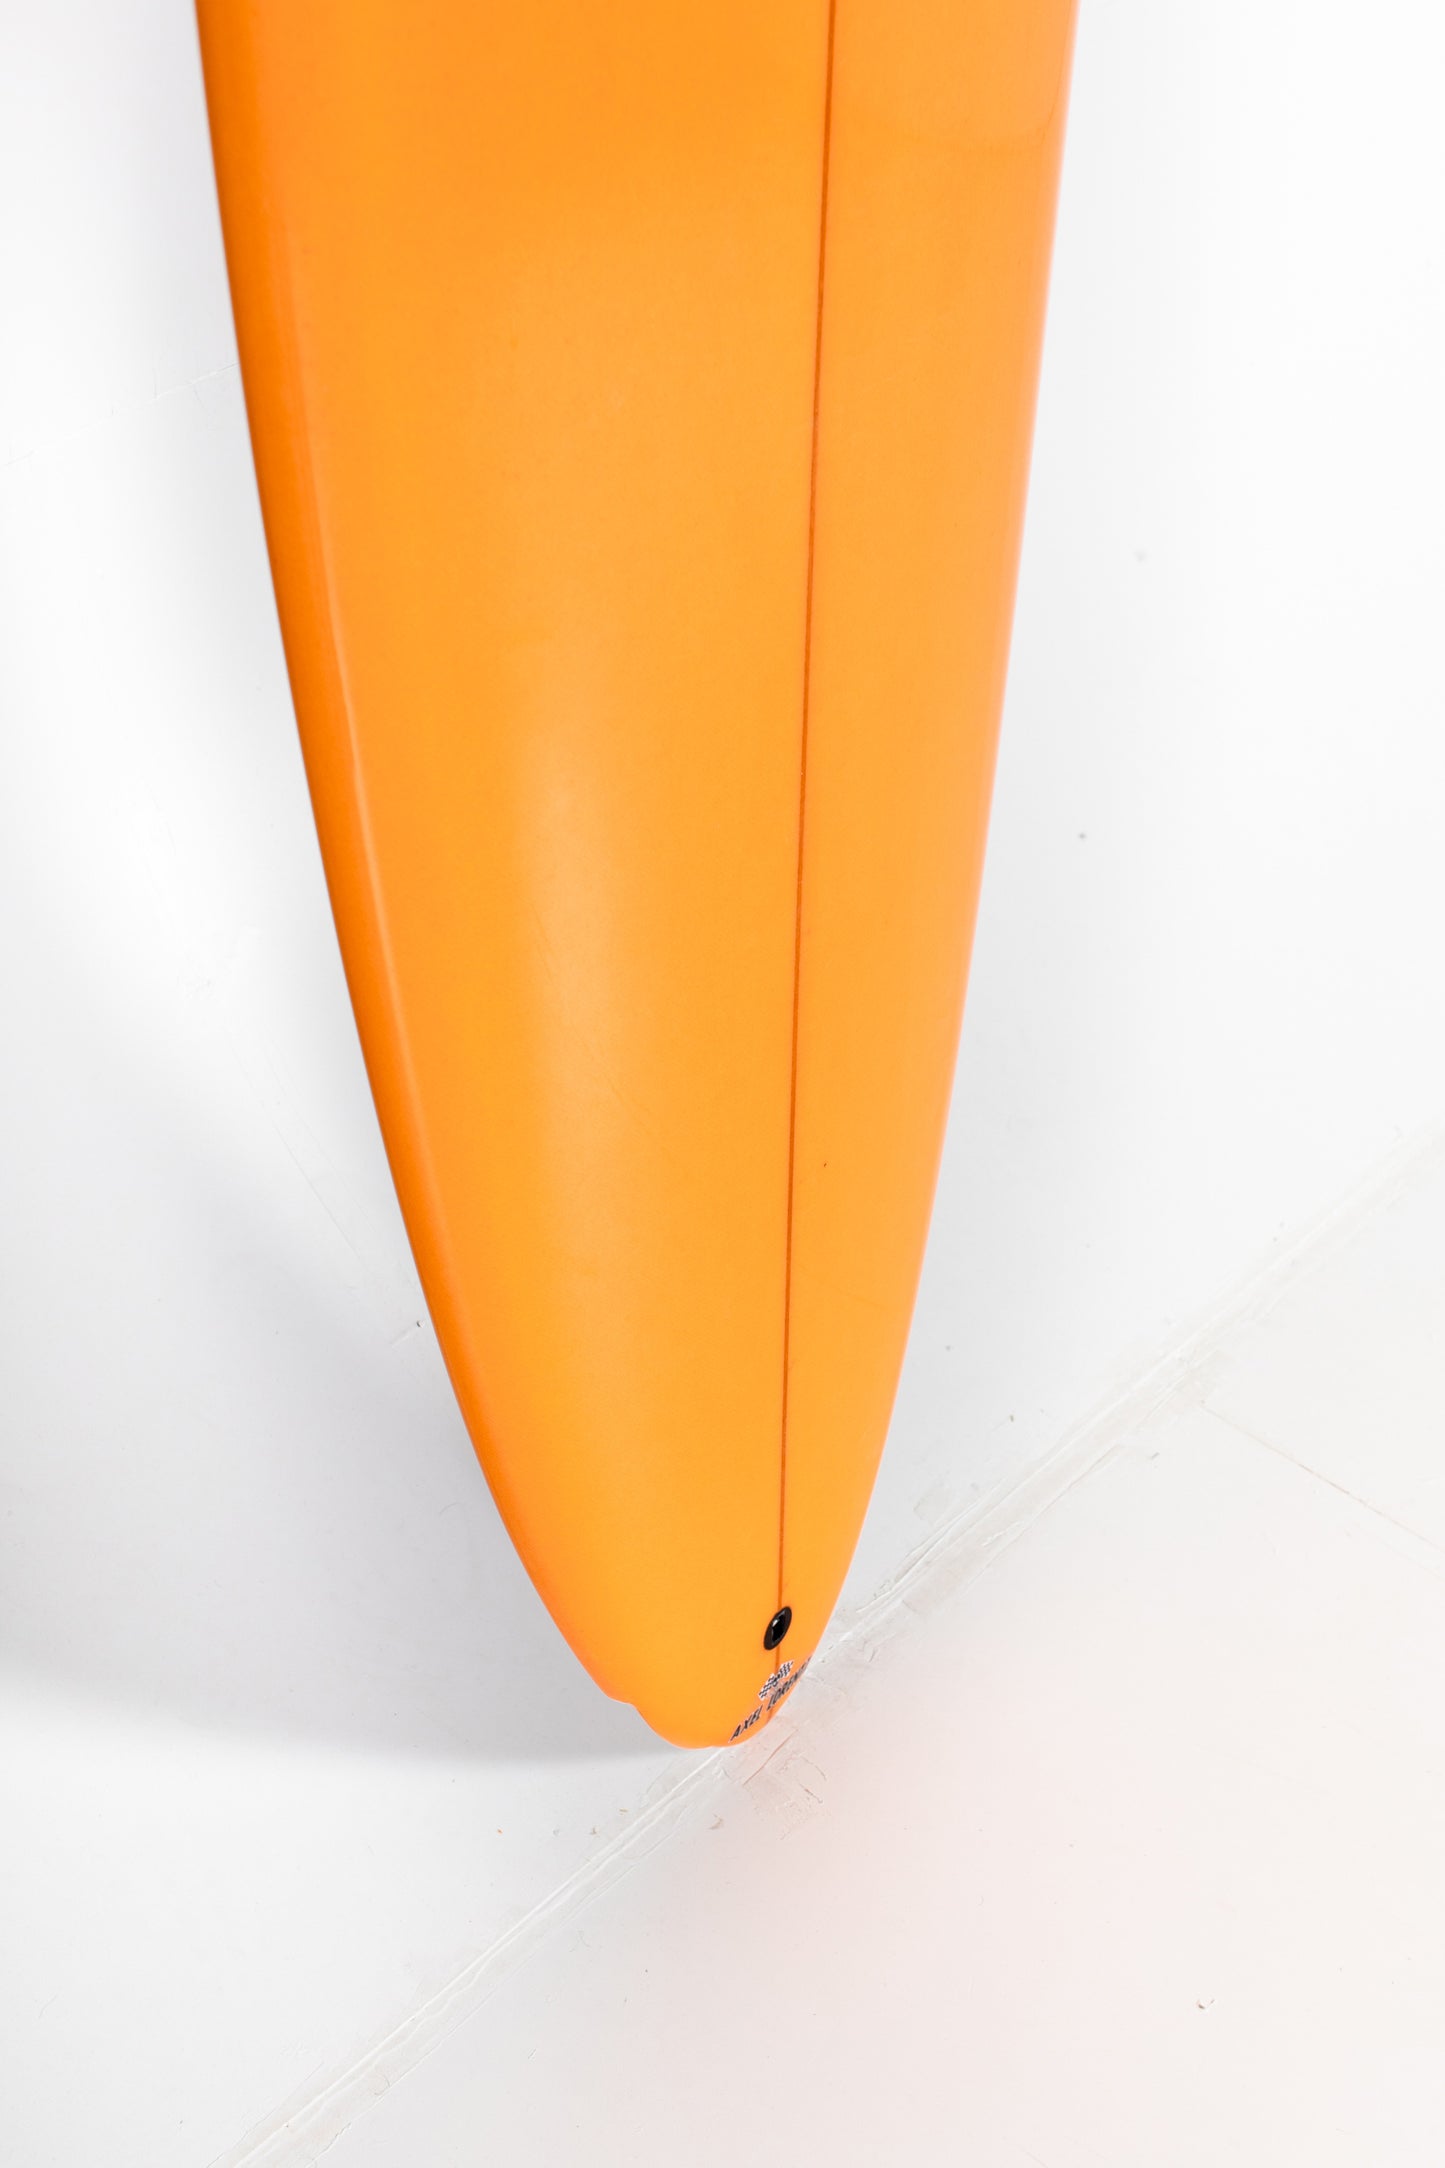 
                  
                    Pukas Surf Shop - Pukas Surfboard - LADY TWIN by Axel Lorentz - 7’2” x 21,38 x 2,97 - 47,85L - AX05510
                  
                